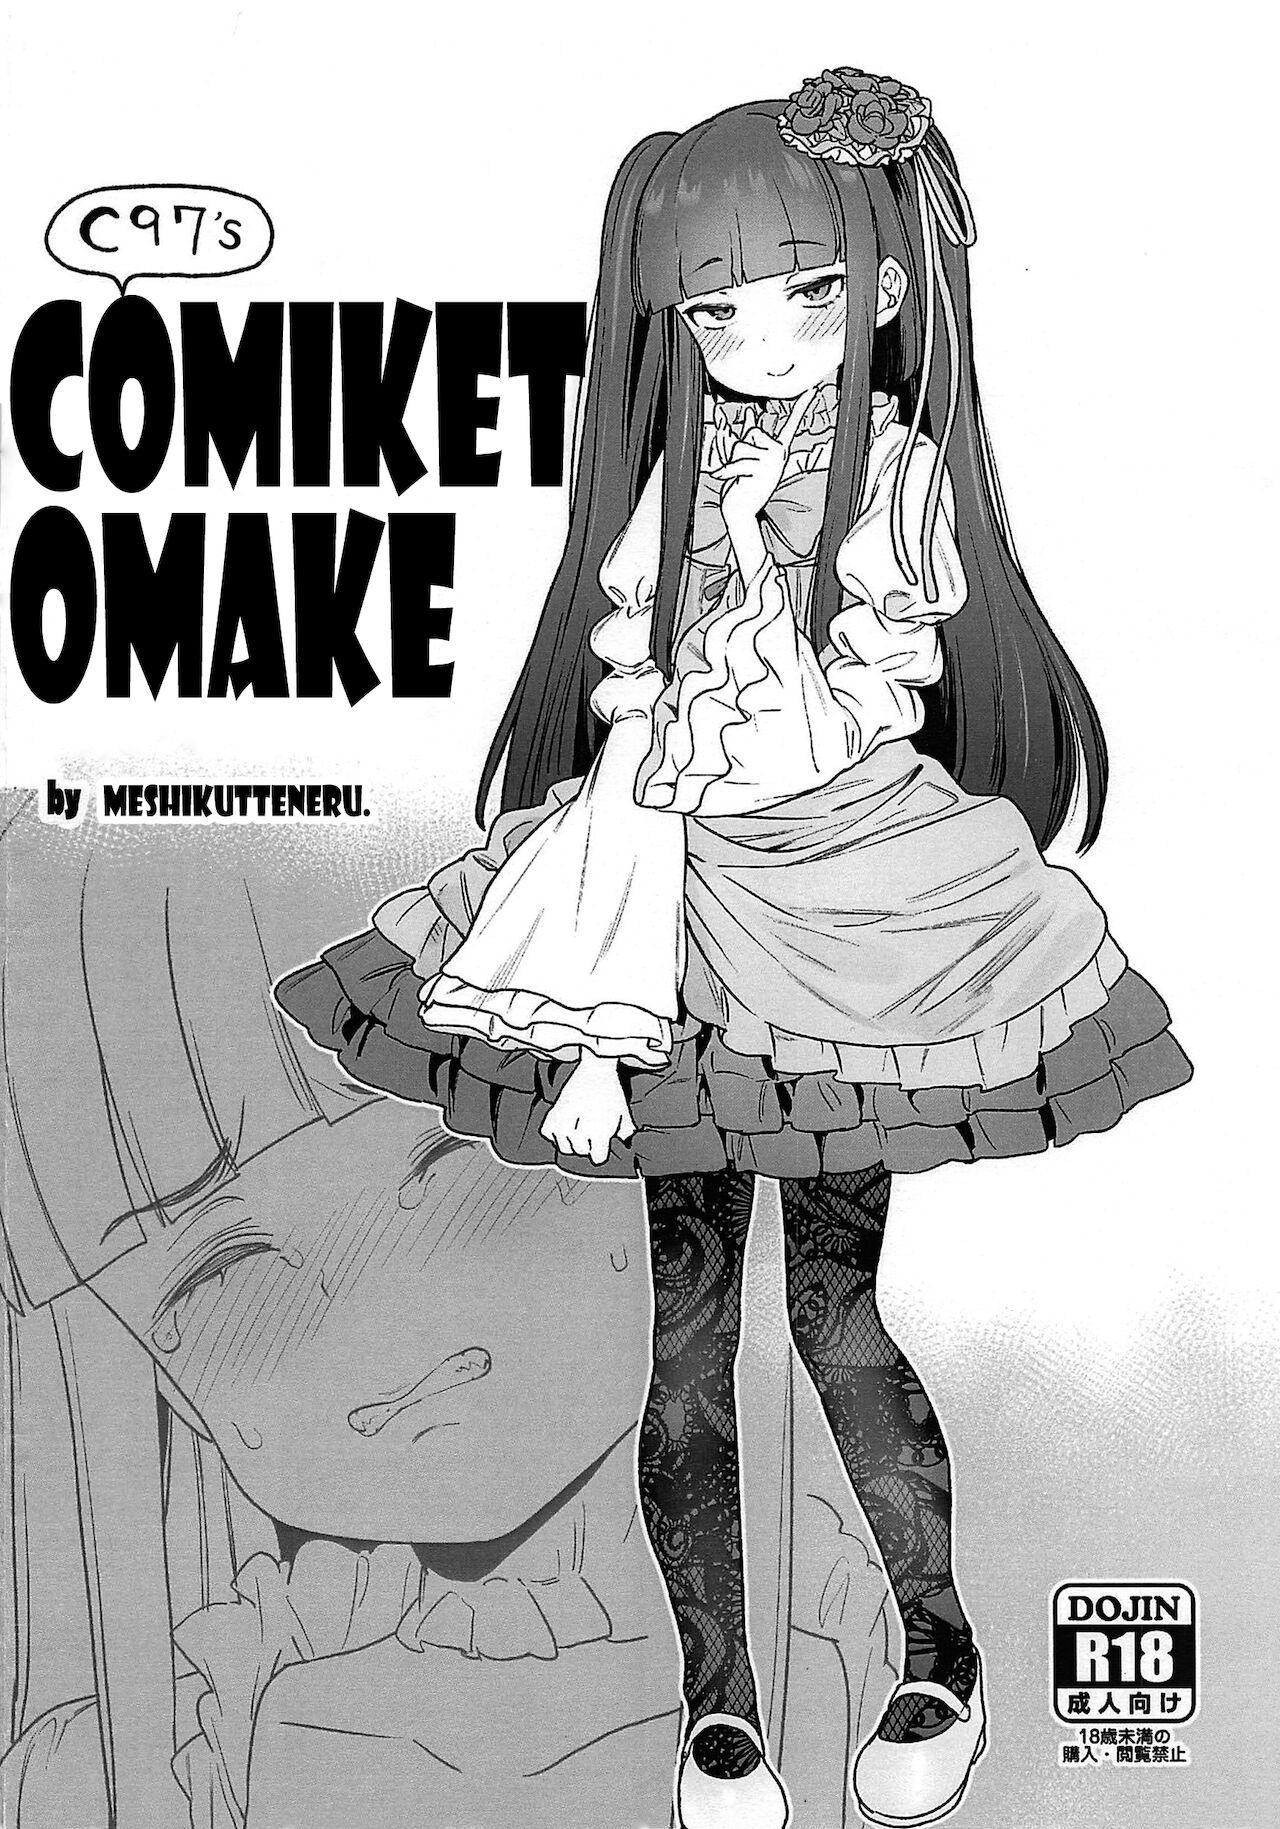 C97 no Comike no Omake | C97 Comiket Omake 0